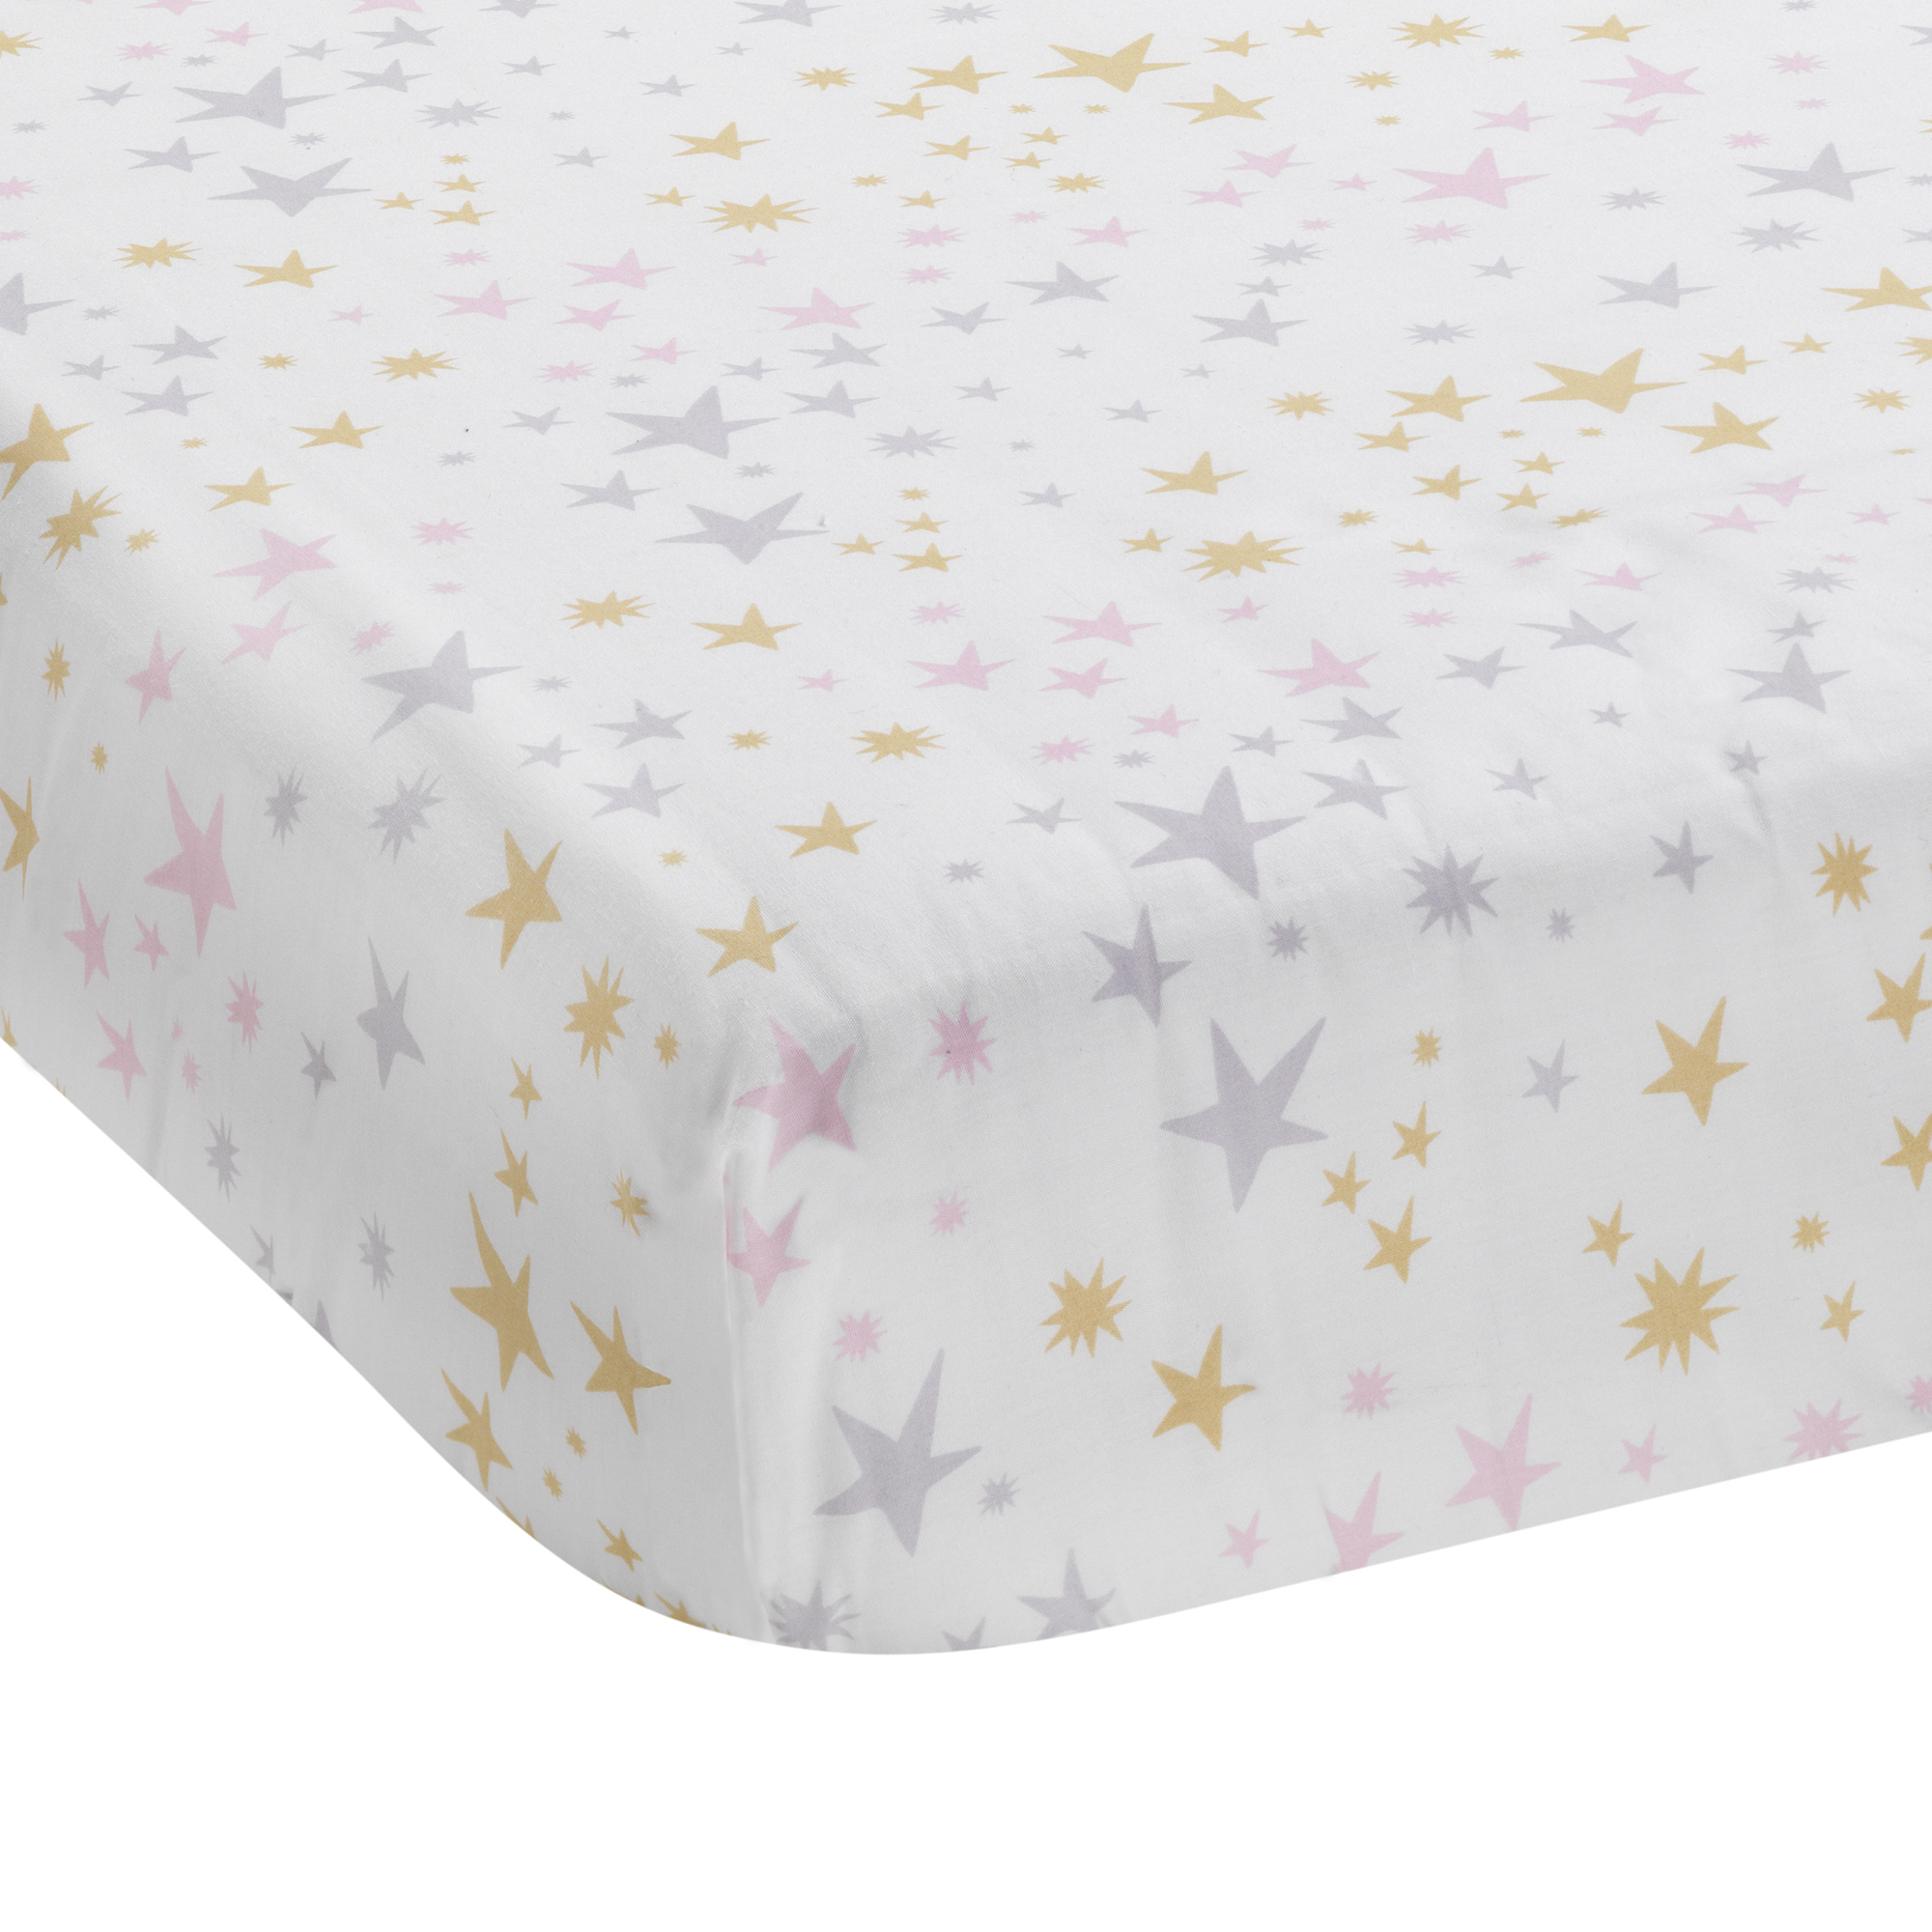 Bedtime Originals Rainbow Unicorn 3-Piece Crib Bedding Set - Pink, Purple - image 4 of 5